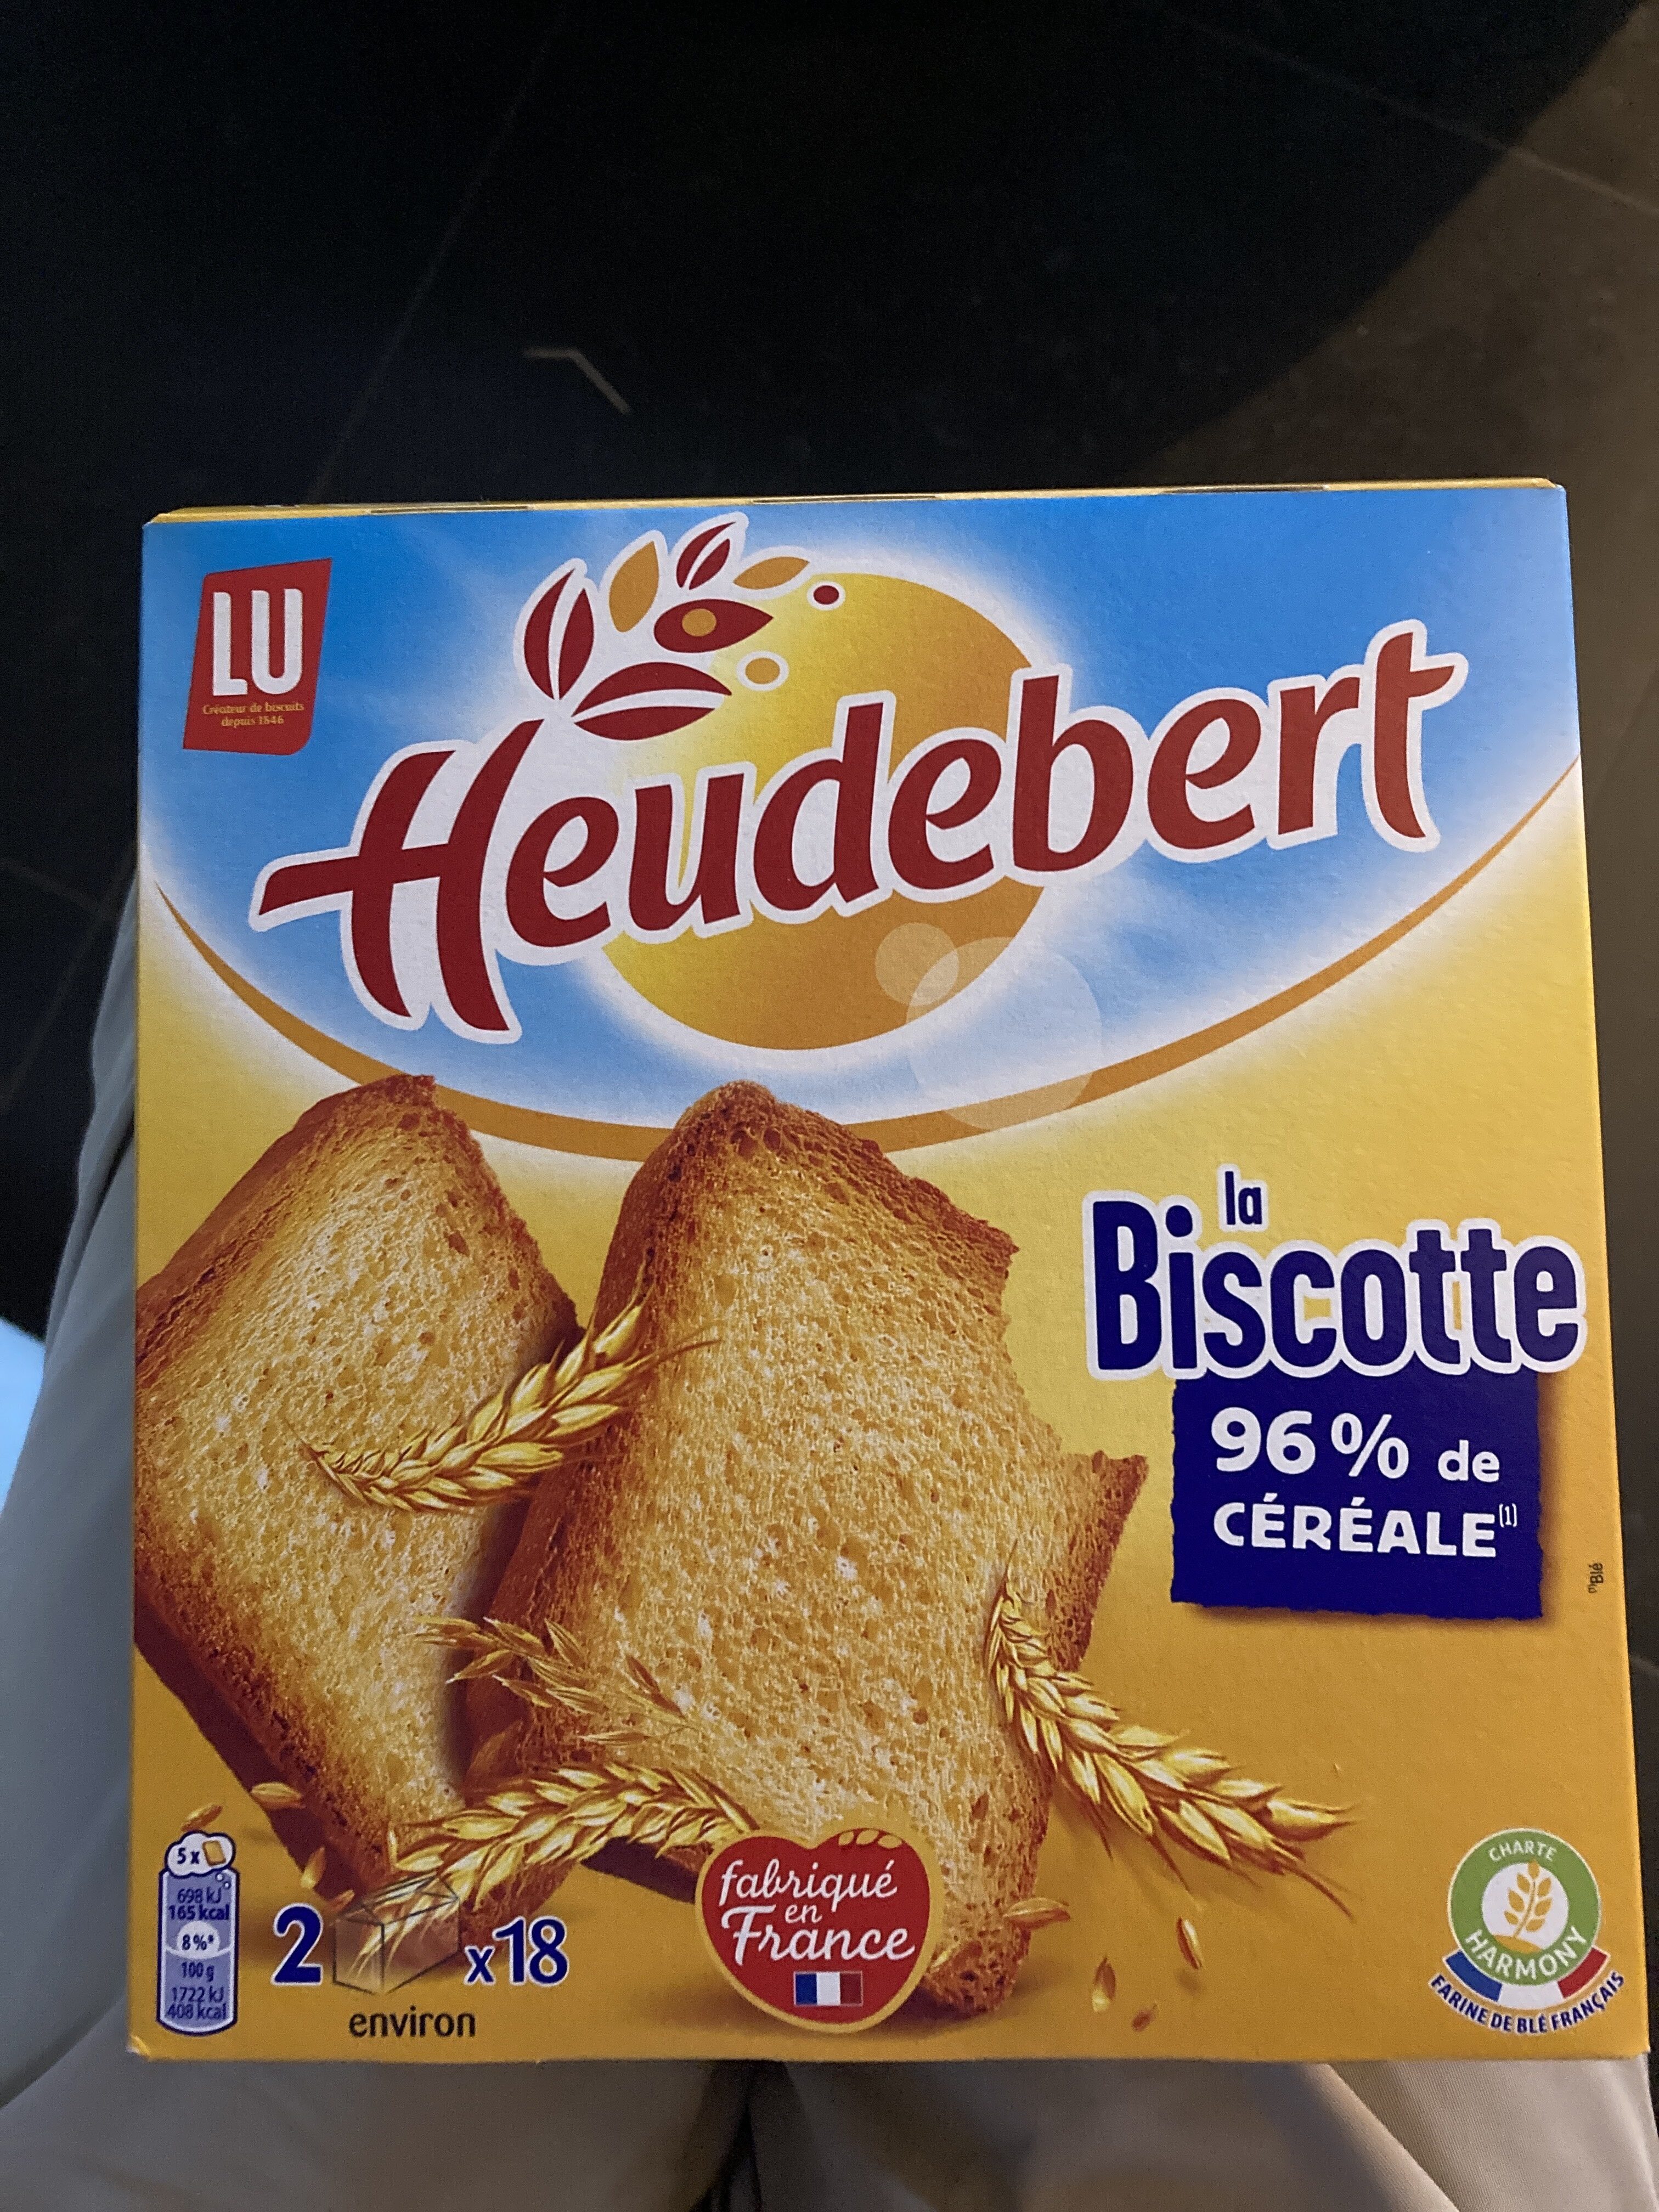 Lu - Heudebert Biscottes, 290g (10.2 oz) - Product - fr